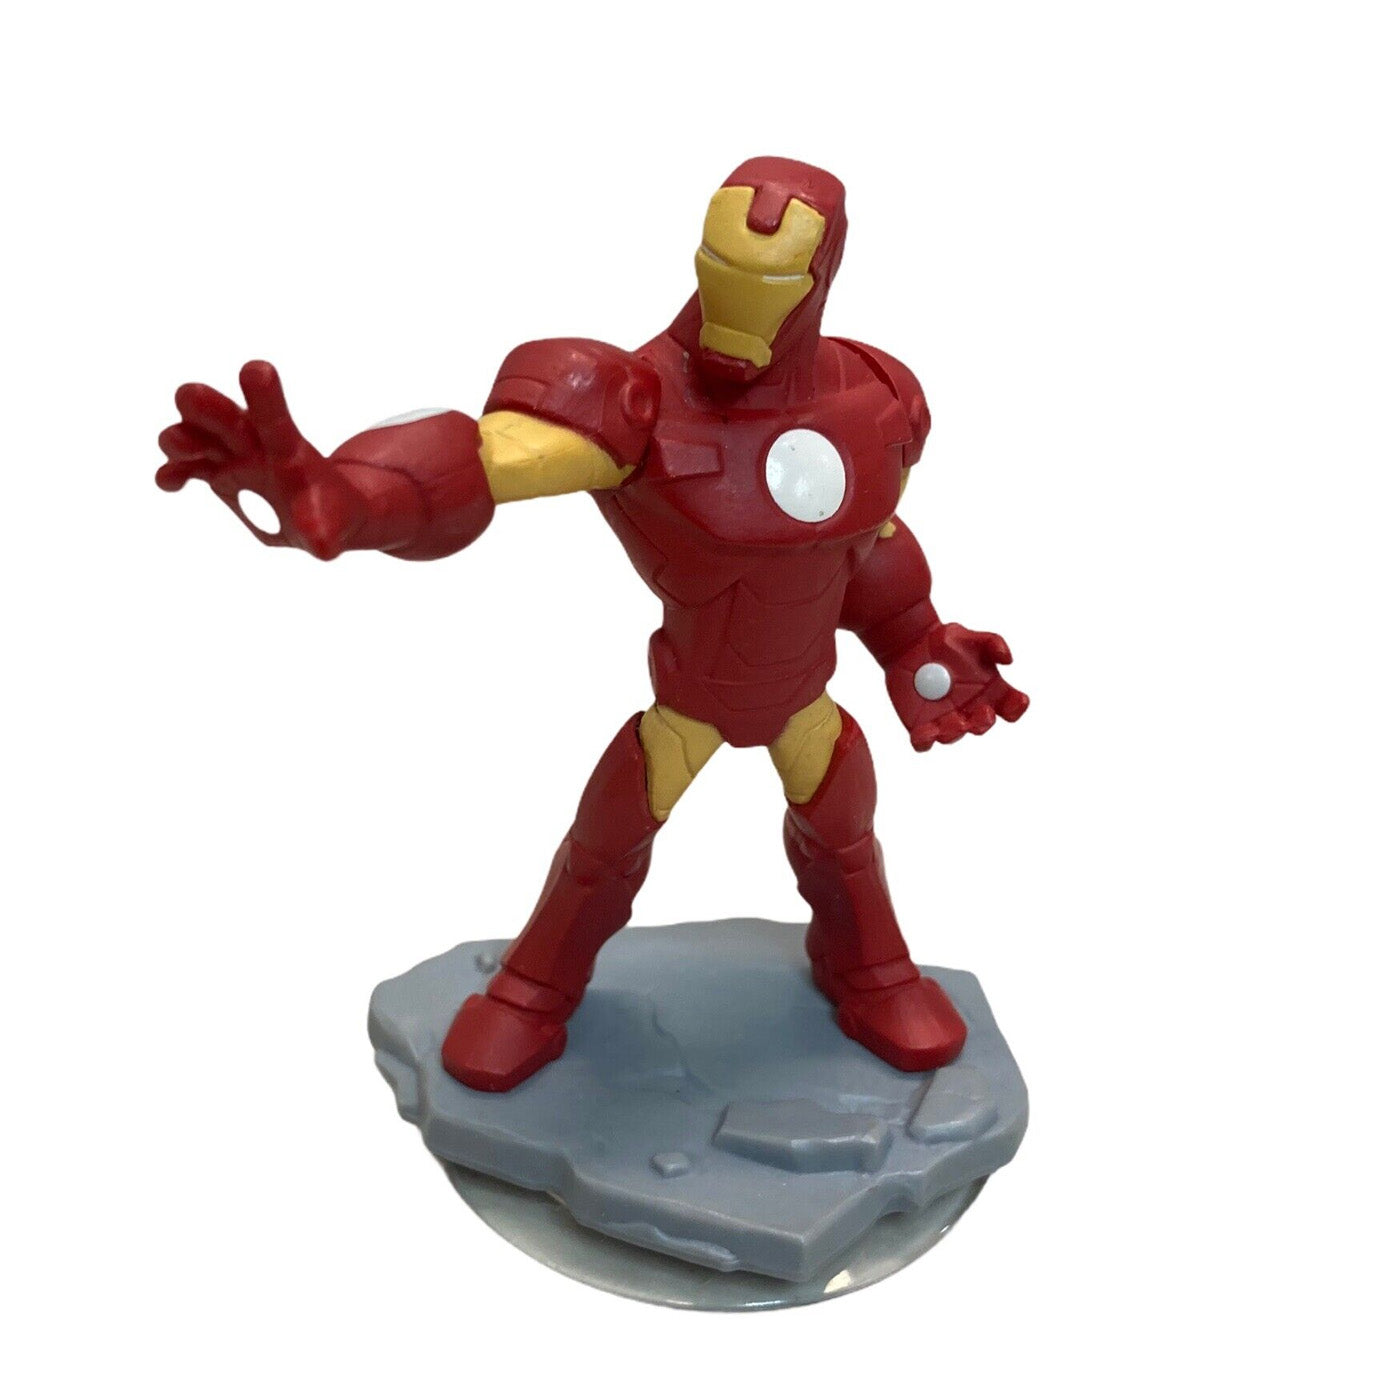 Disney Infinity 2.0 Character: Iron Man